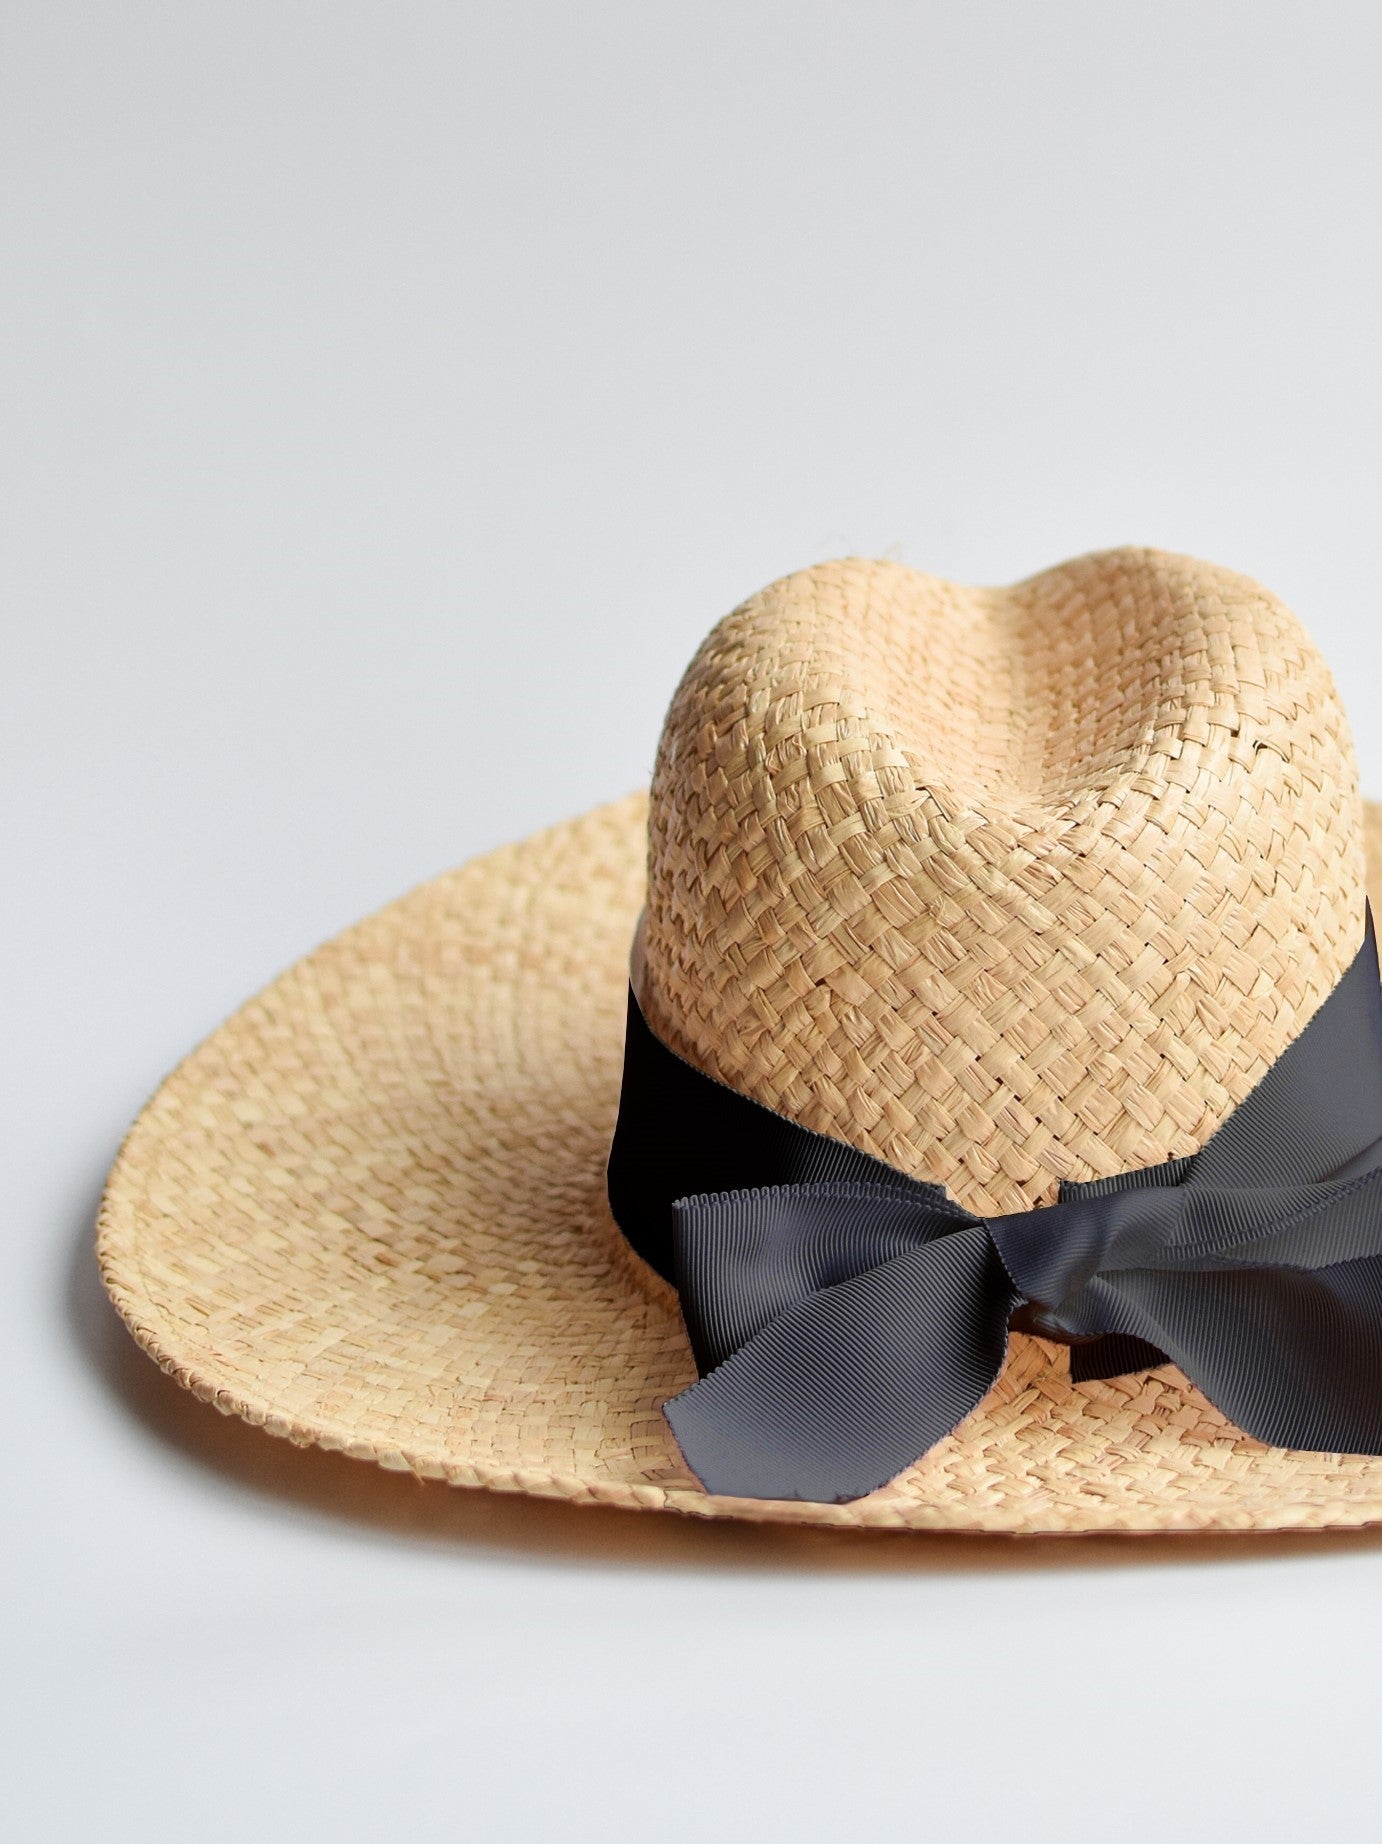 raffia straw panama hat with black grosgrain tie